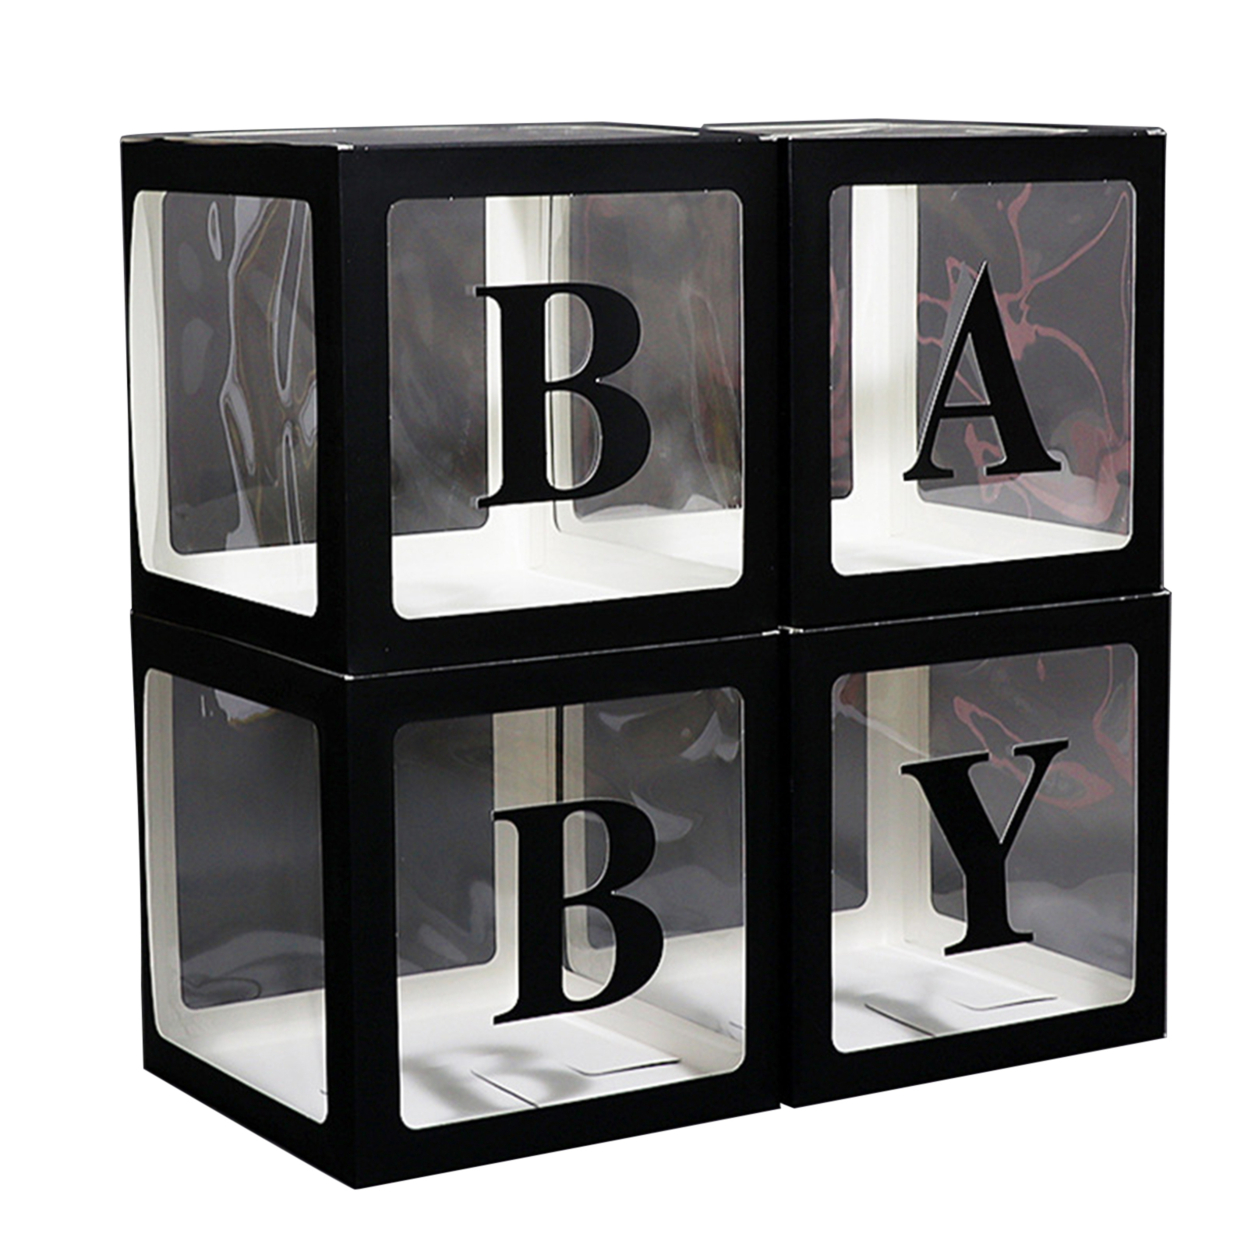 1 Set Balloon Box Transparent Wide Application Plastic Square Clear DIY Letter Box Decor Party Supplies - black, 2